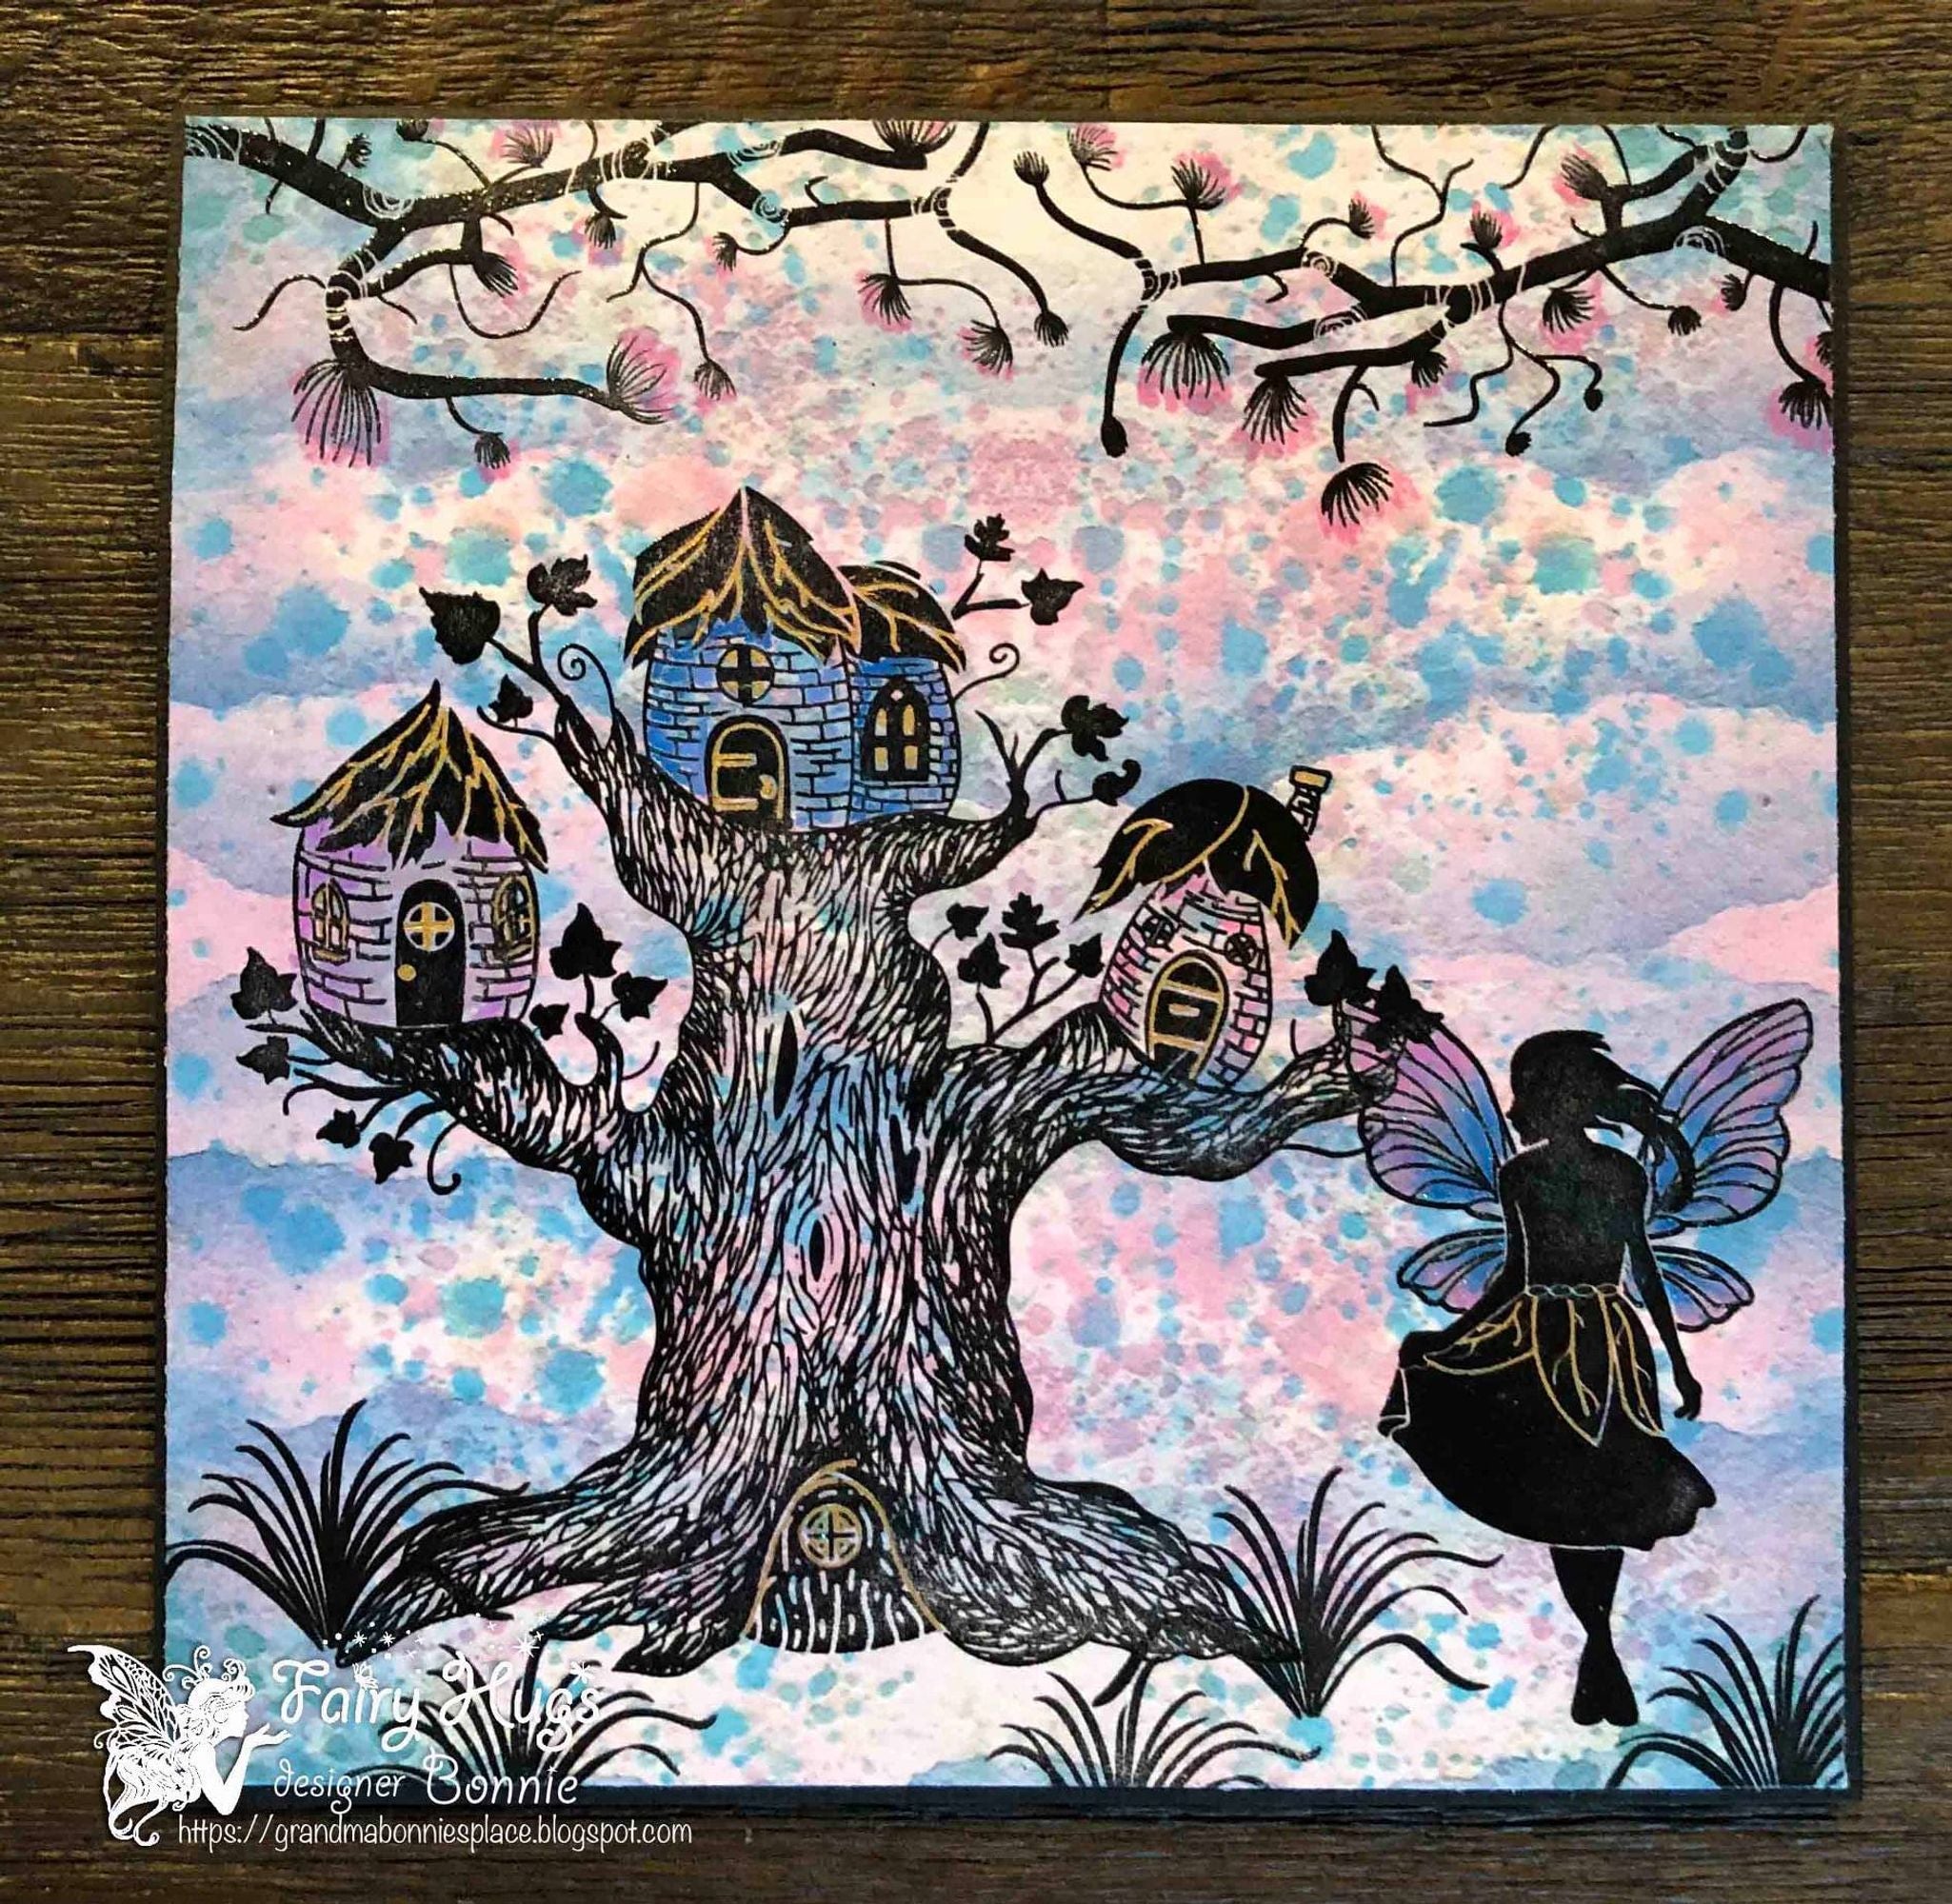 Fairy Hugs Stamps - Estrella